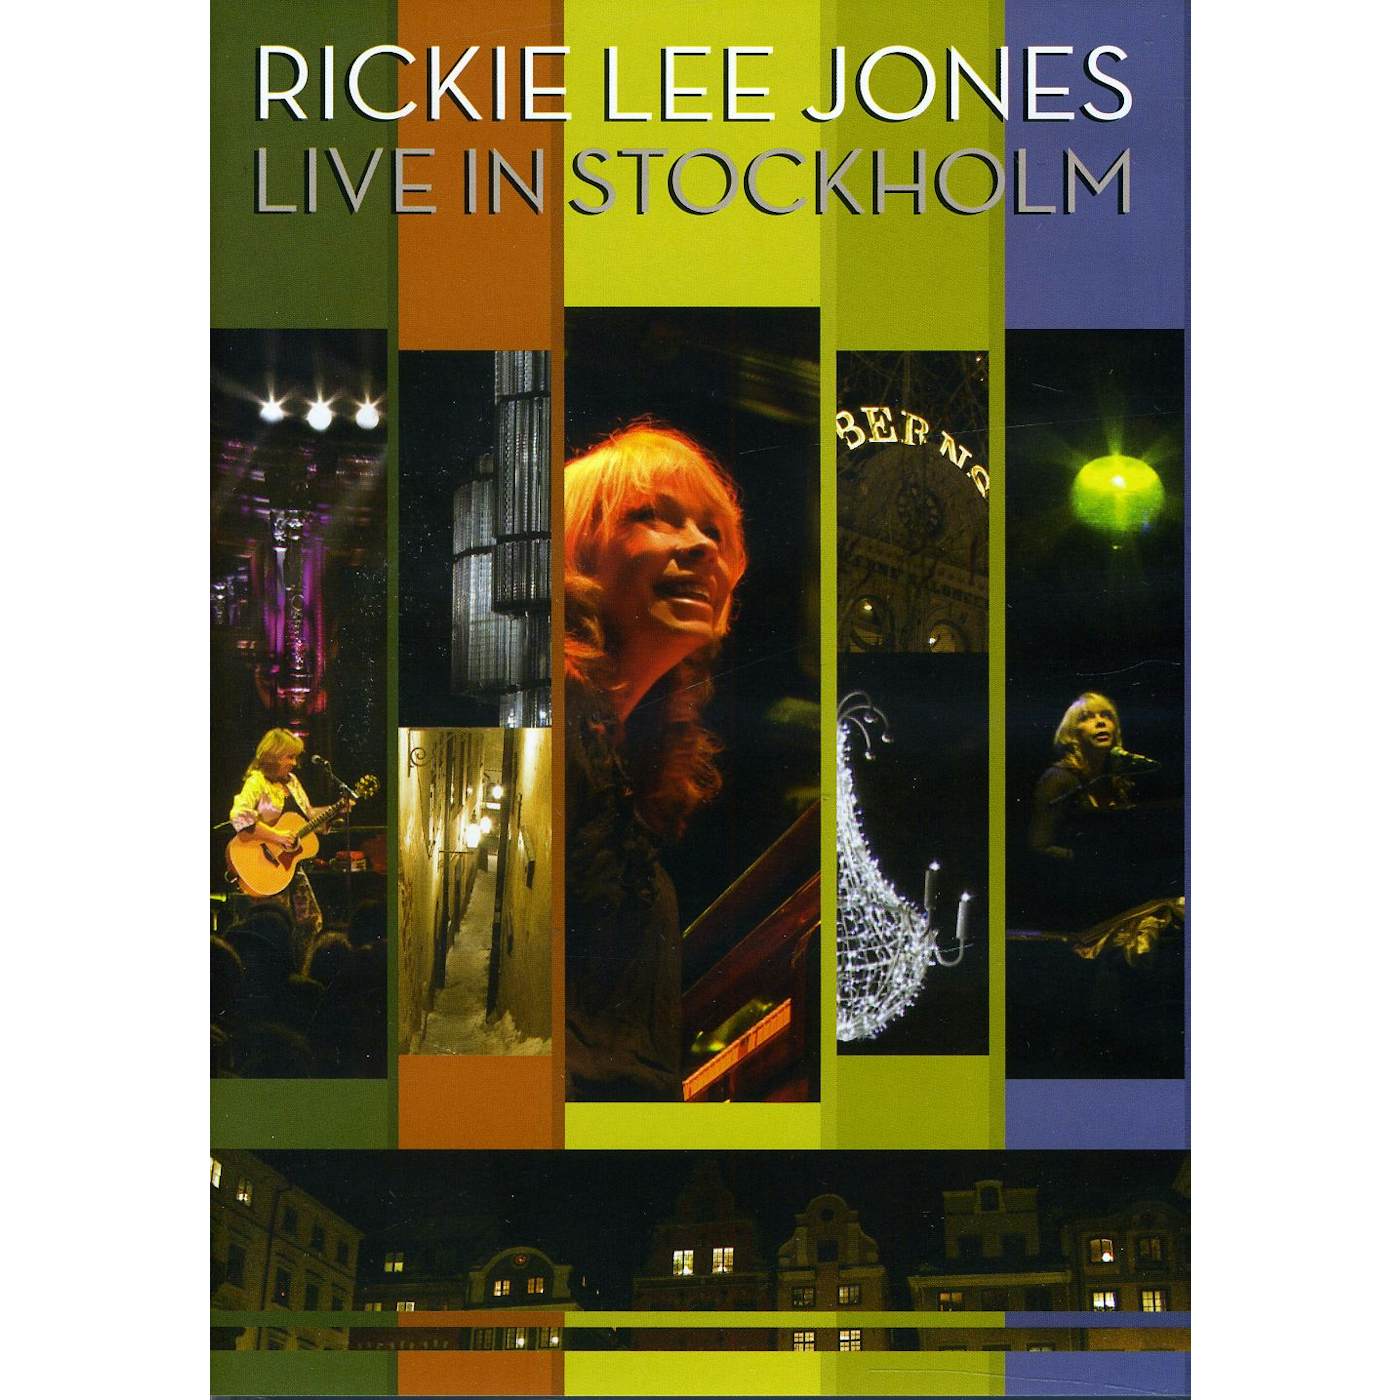 Rickie Lee Jones LIVE IN STOCKHOLM DVD